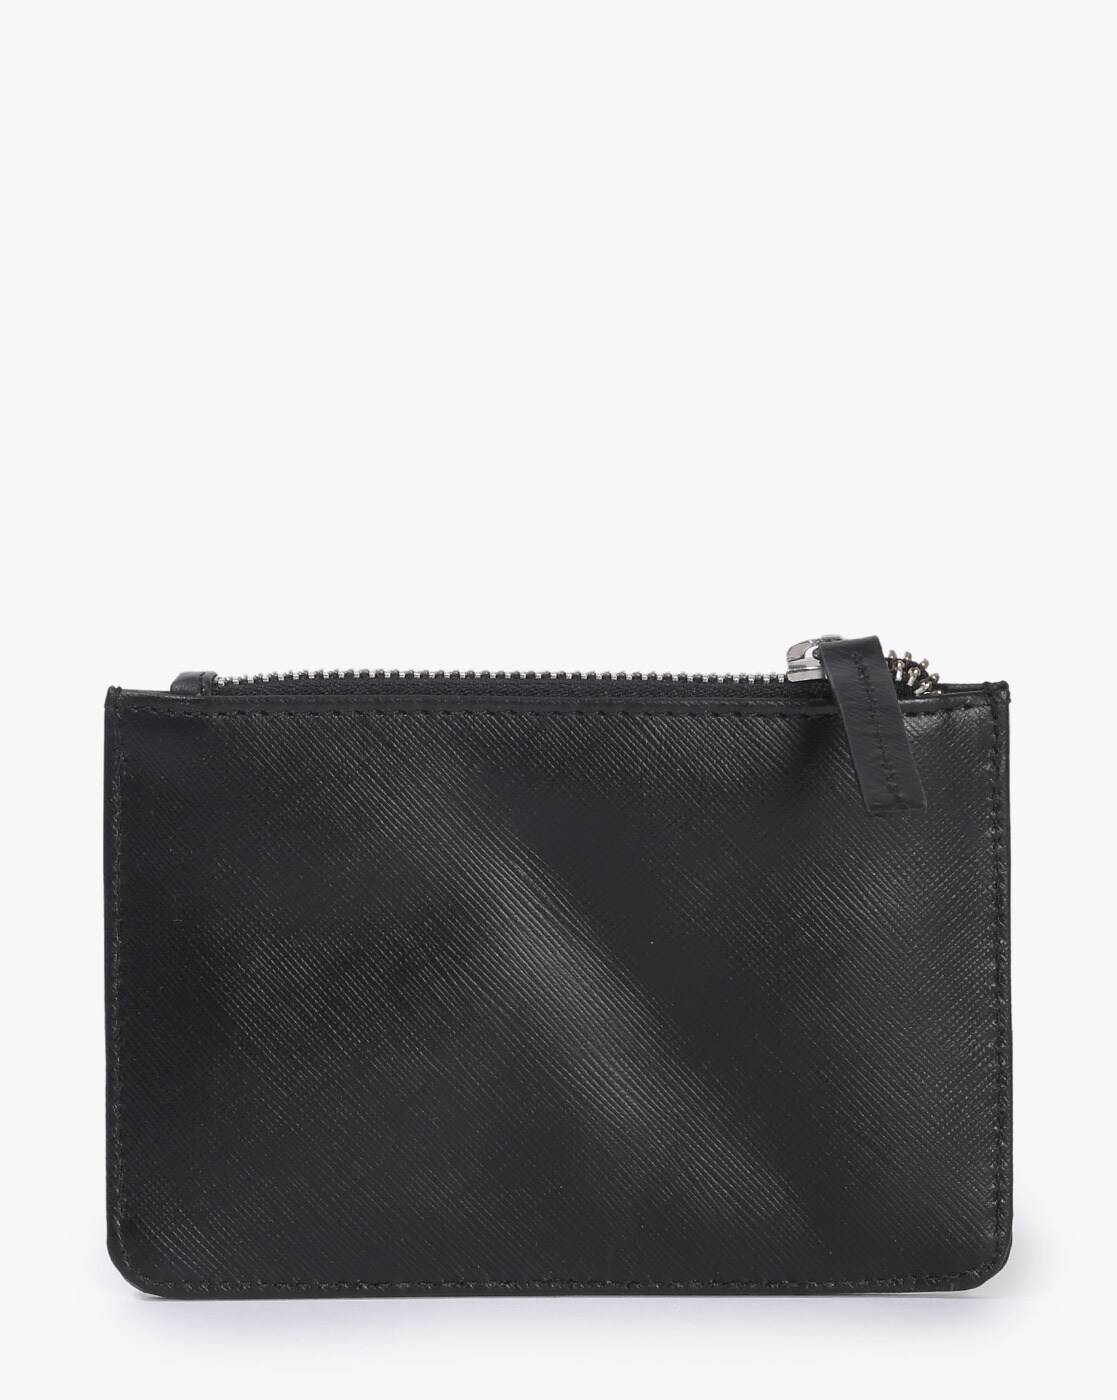 Shop Levis Long Leather Wallet For Men online | Lazada.com.ph